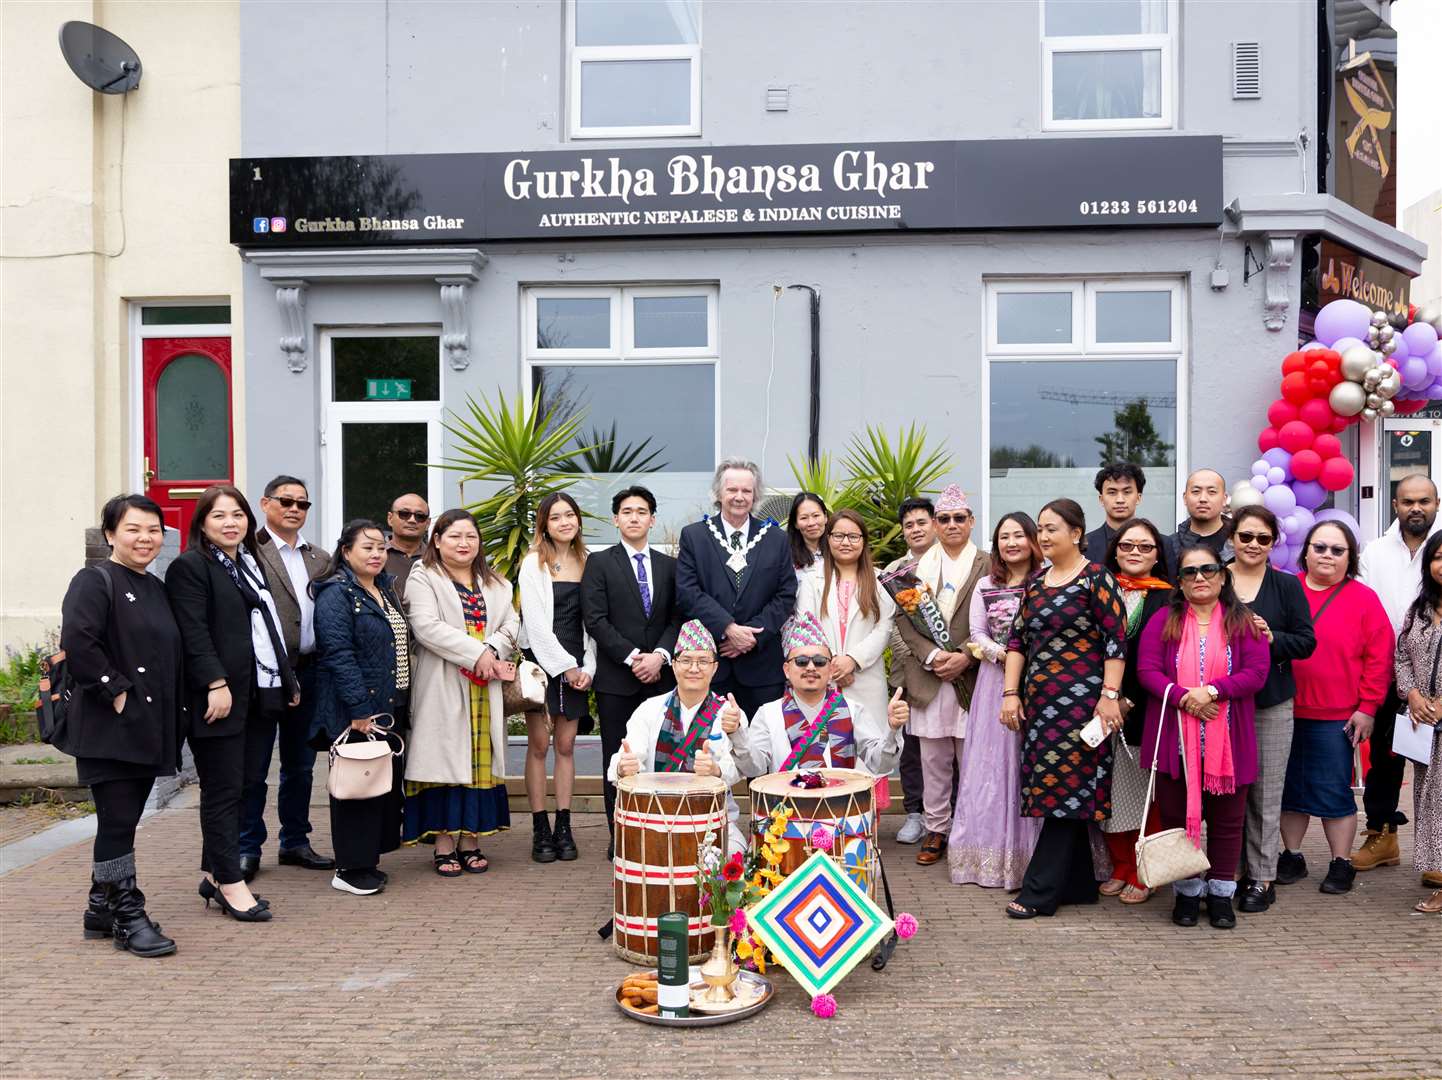 Gurkha Bhansa Ghar has reopened following a makover. Pictures: Gurkha Bhansa Ghar